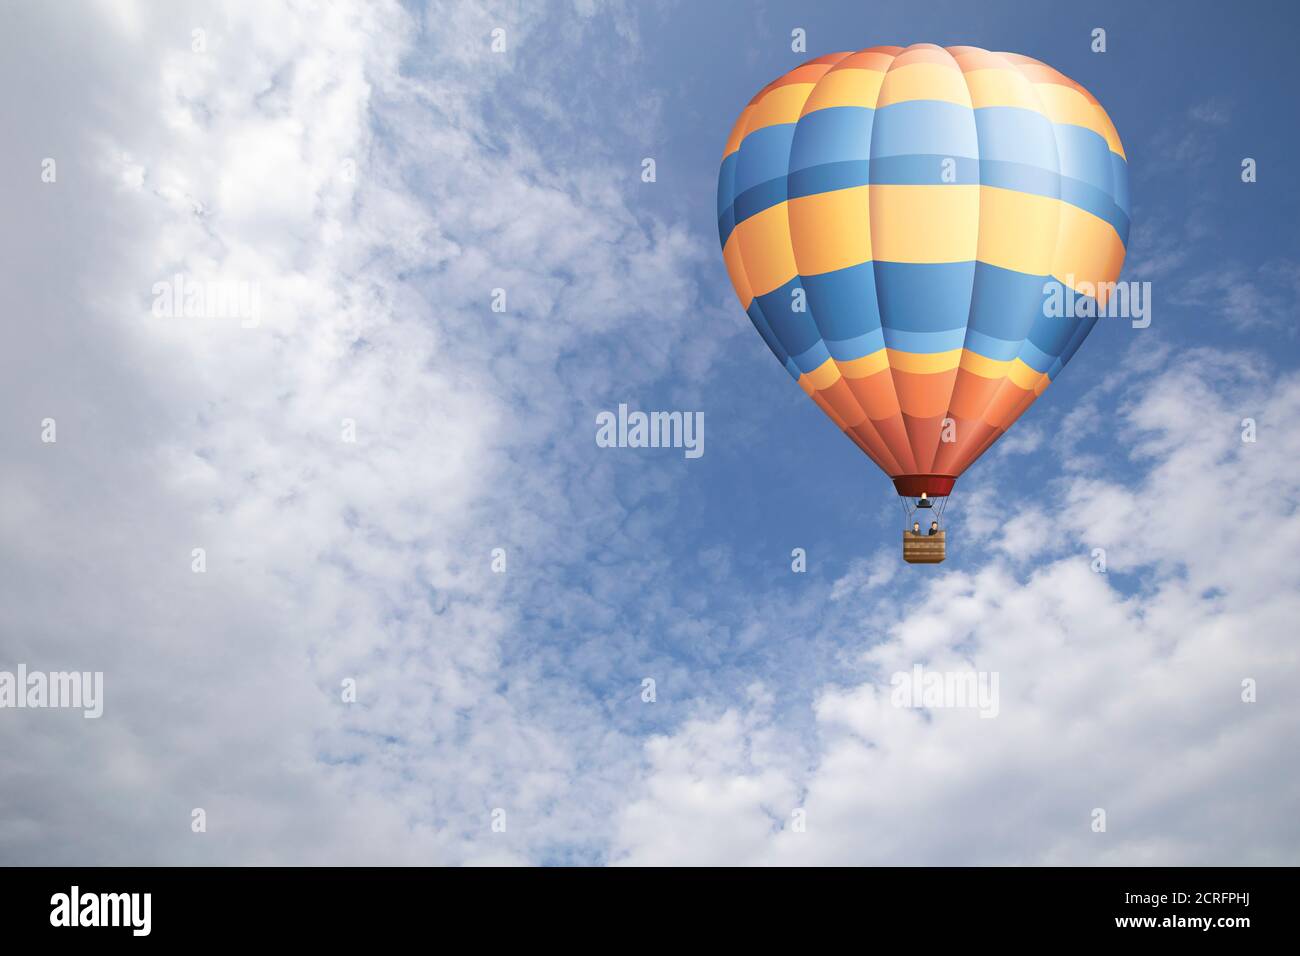 Hot air balloon set against a blue cloudy daytime sky Stock Photo